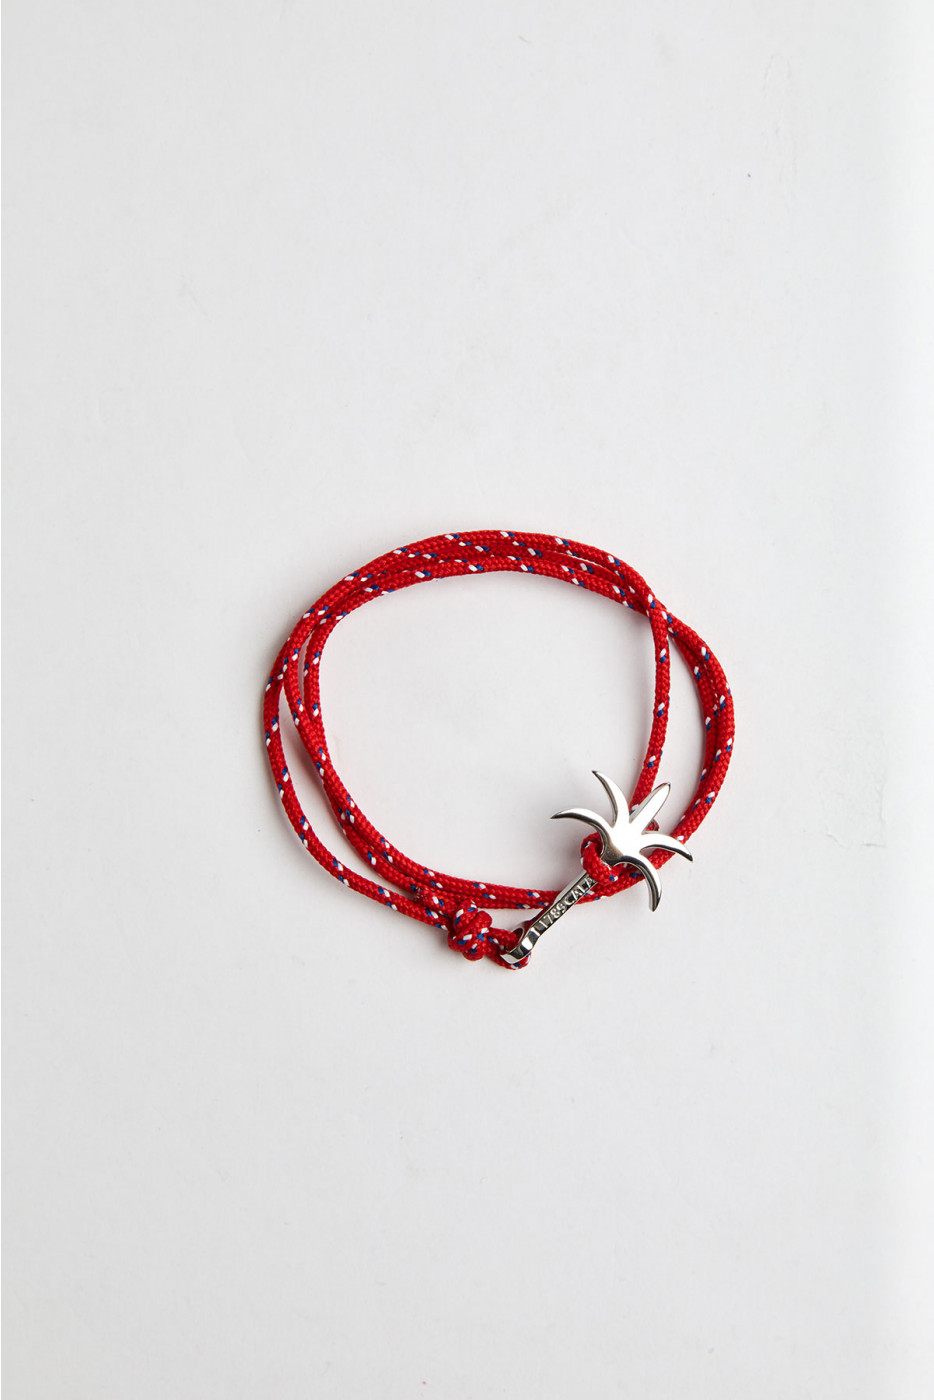 Bracelet Corde Rouge - PALMIER BRACELET 